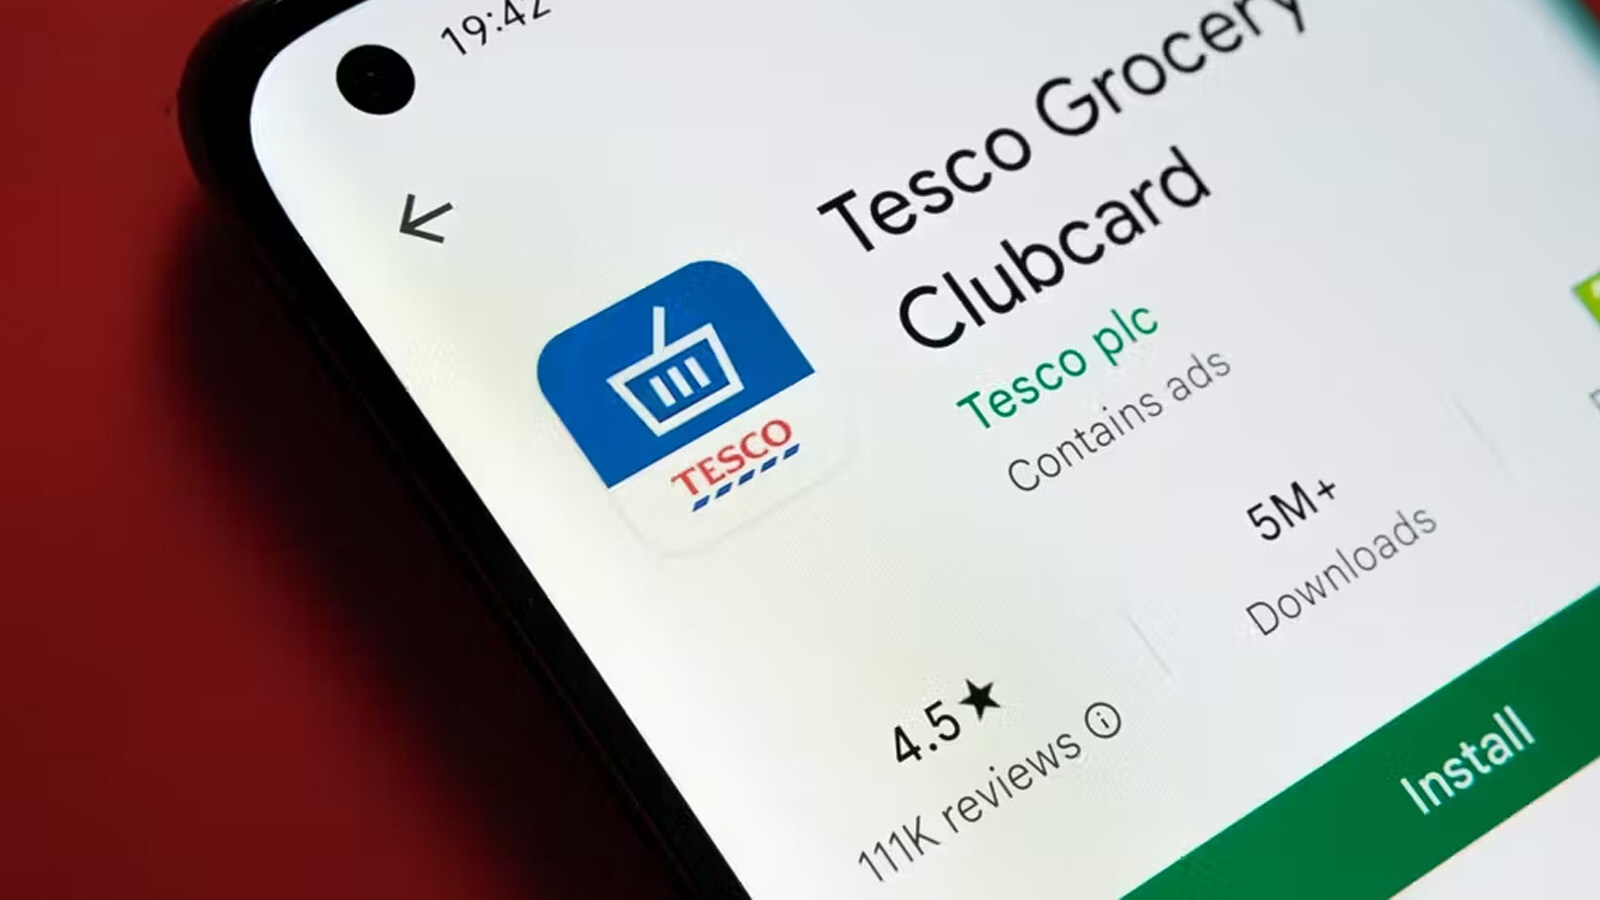 Smartphone screen displaying Tesco Clubcard app